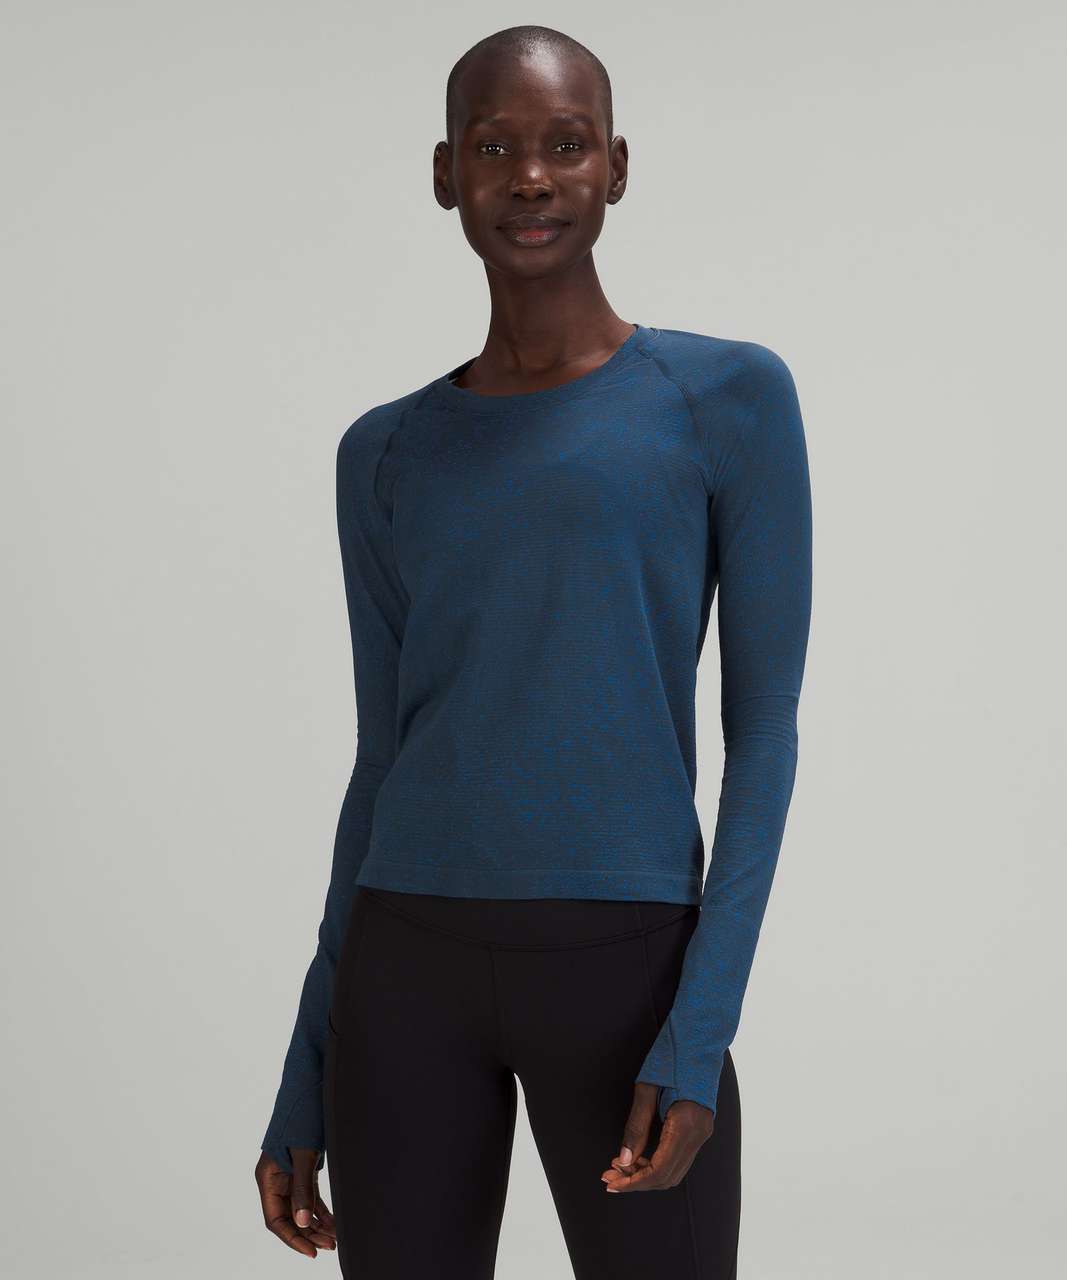 Lululemon Swiftly Tech Long Sleeve Shirt 2.0 *Race Length - Distorted Noise Mineral Blue / Blazer Blue Tone